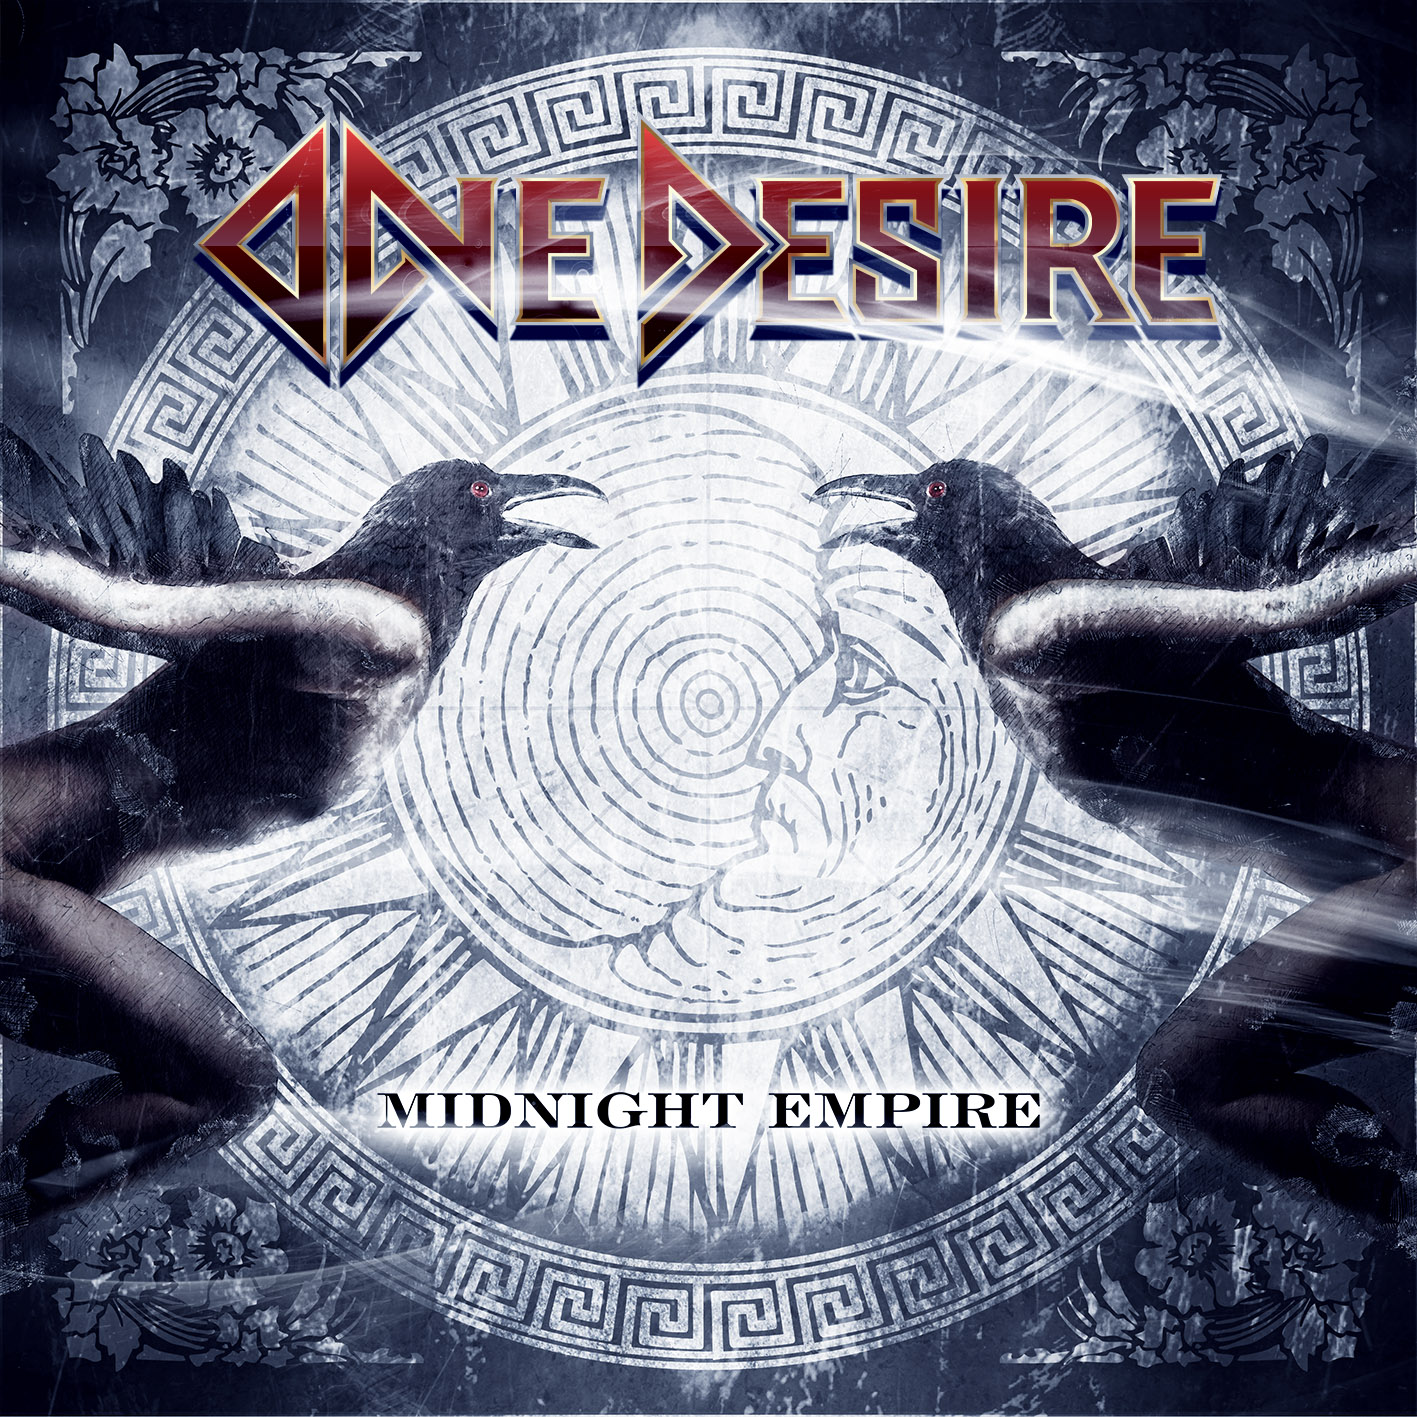 One Desire - “Midnight Empire”